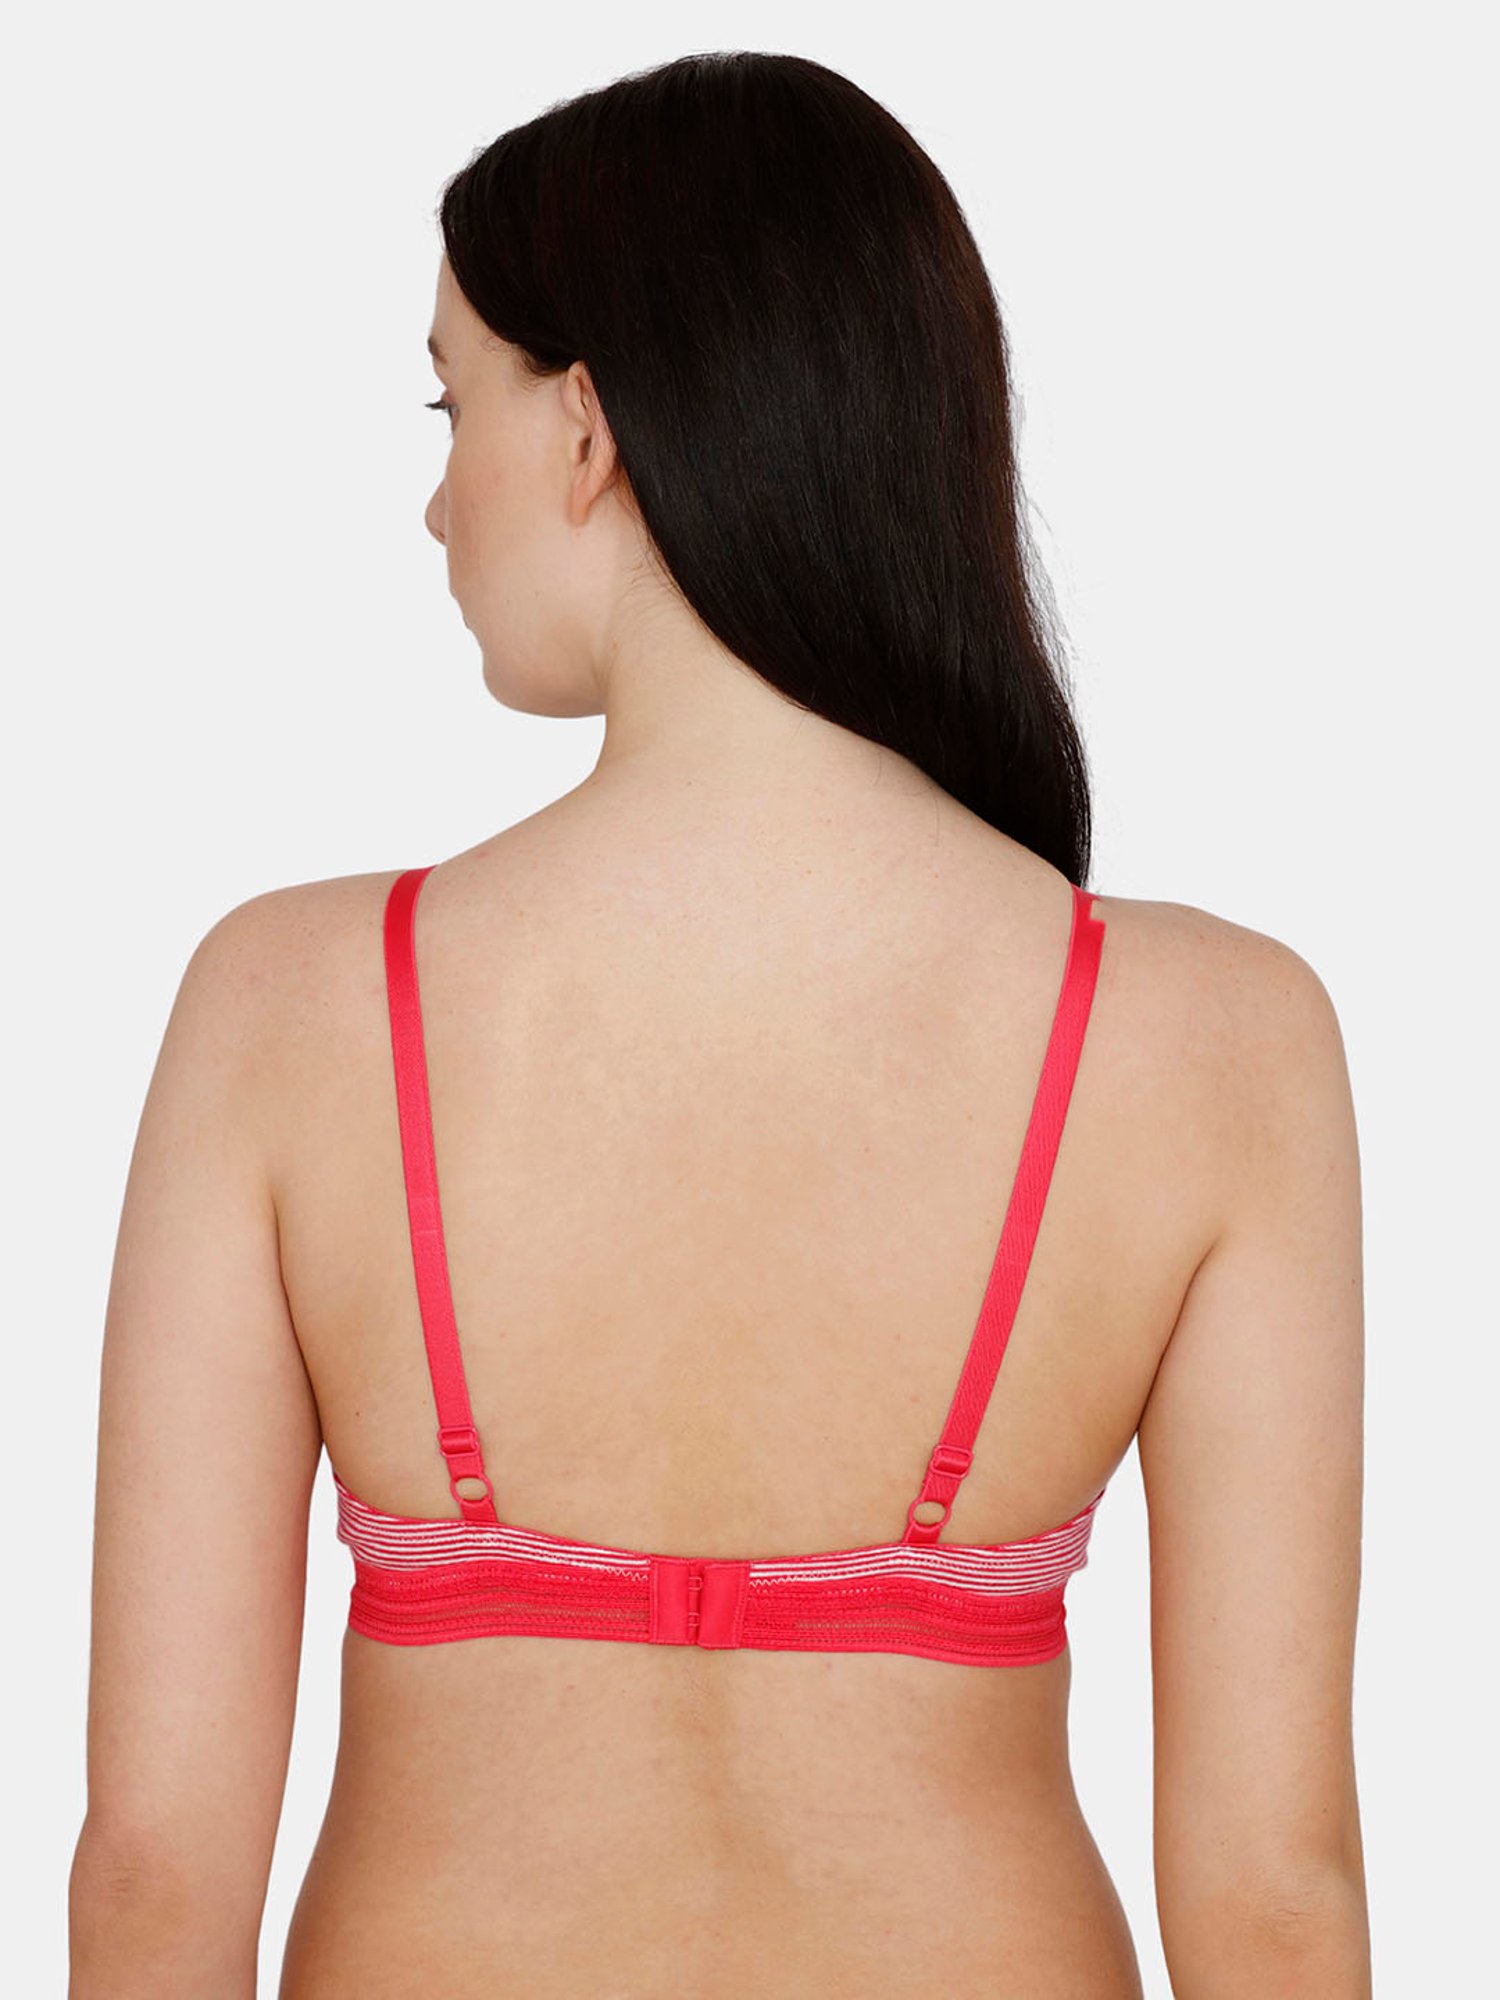 Buy Zivame Red Under wired Padded Push Up Bra for Women Online @ Tata CLiQ